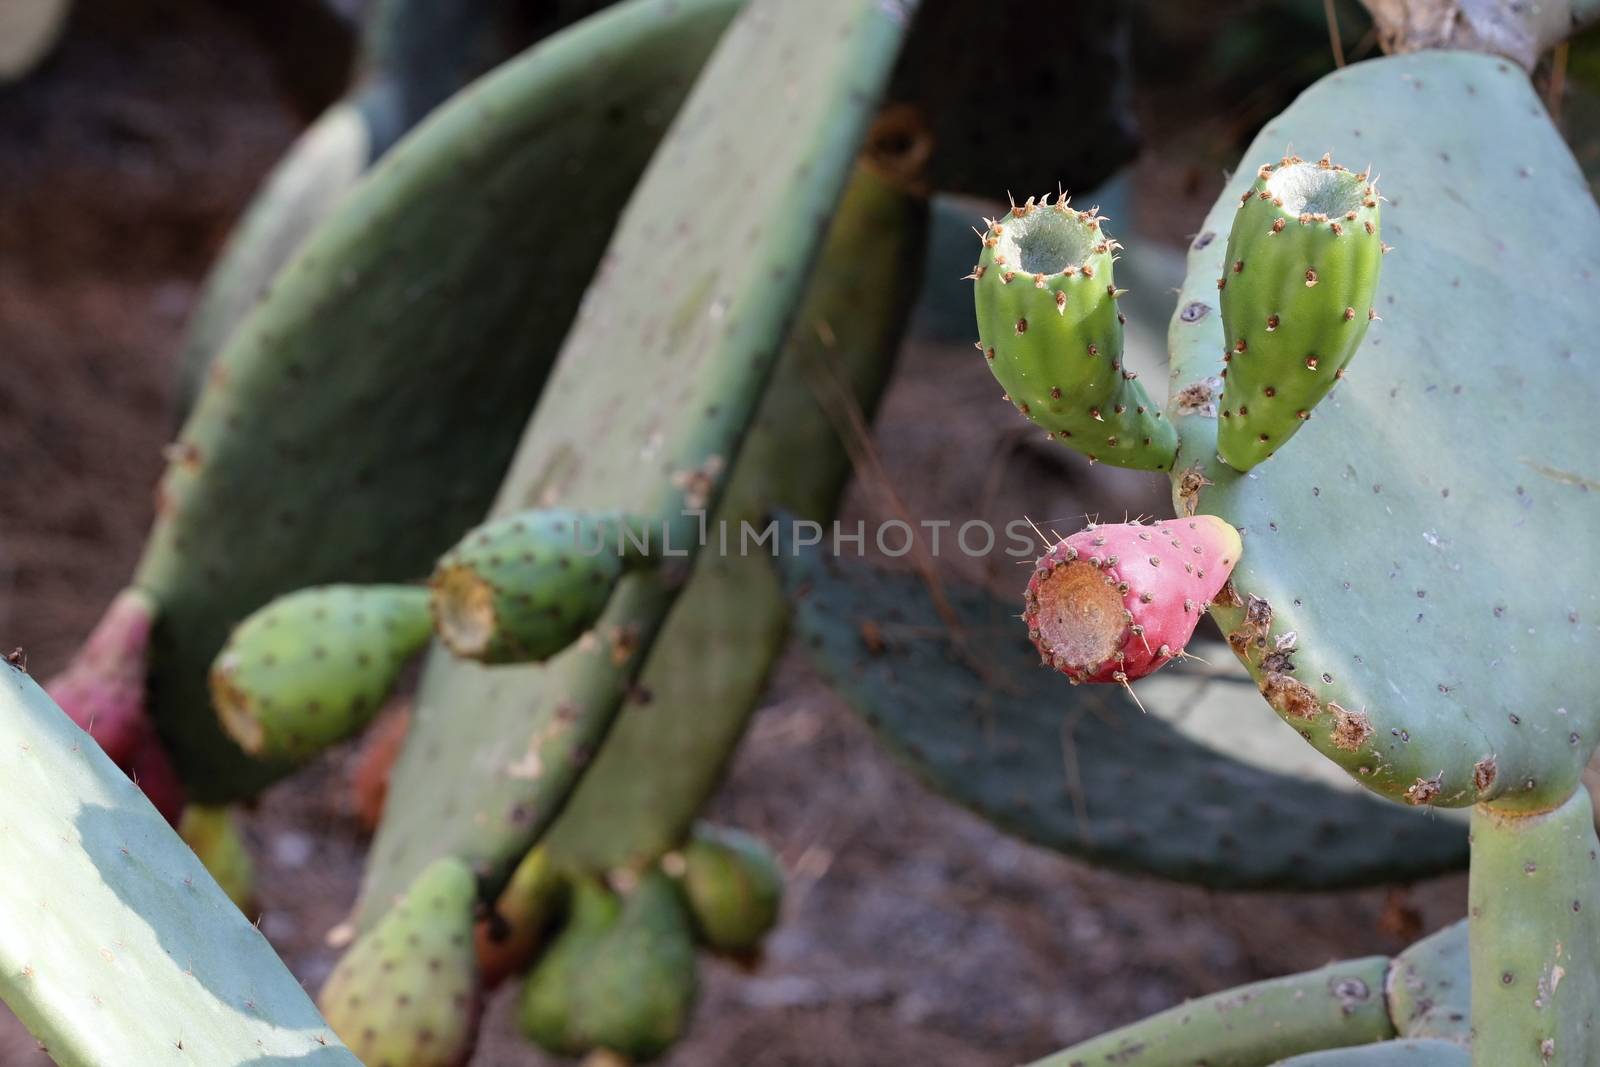 Beautiful Cactus in the Garden by Dermot68